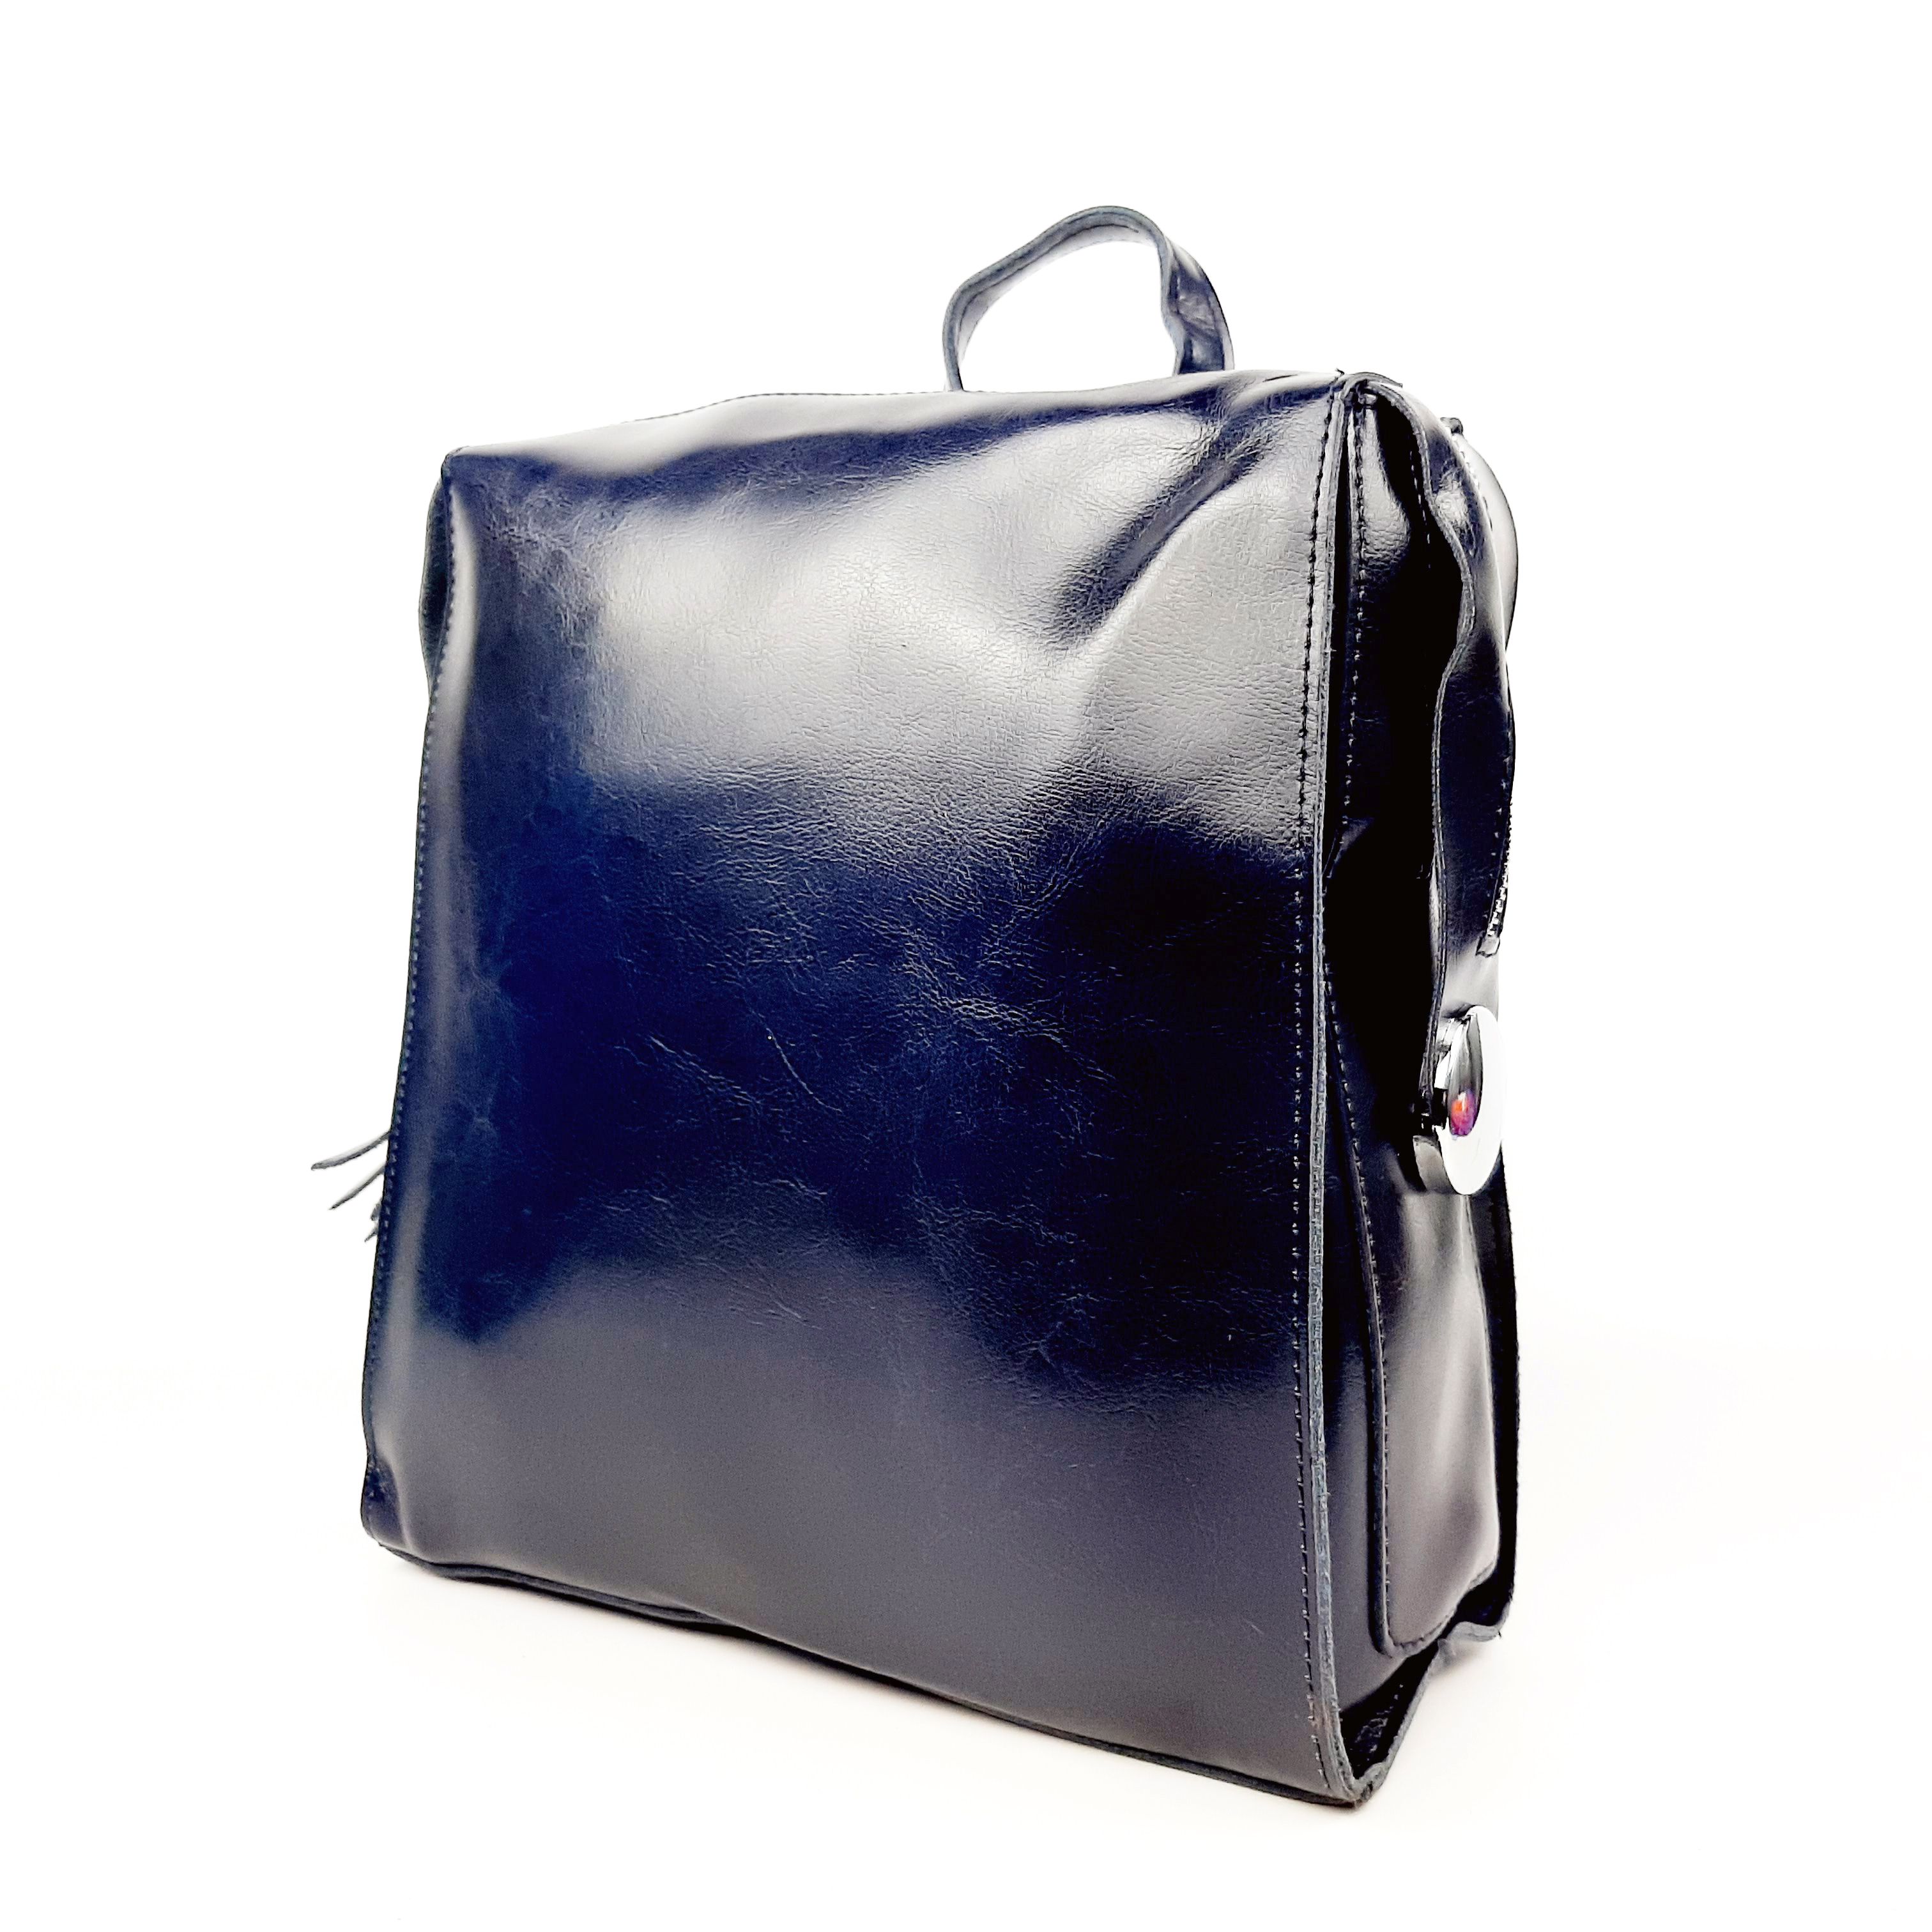 Сумка-рюкзак женская Fuzi house 85018 синяя, 10х27х25 см